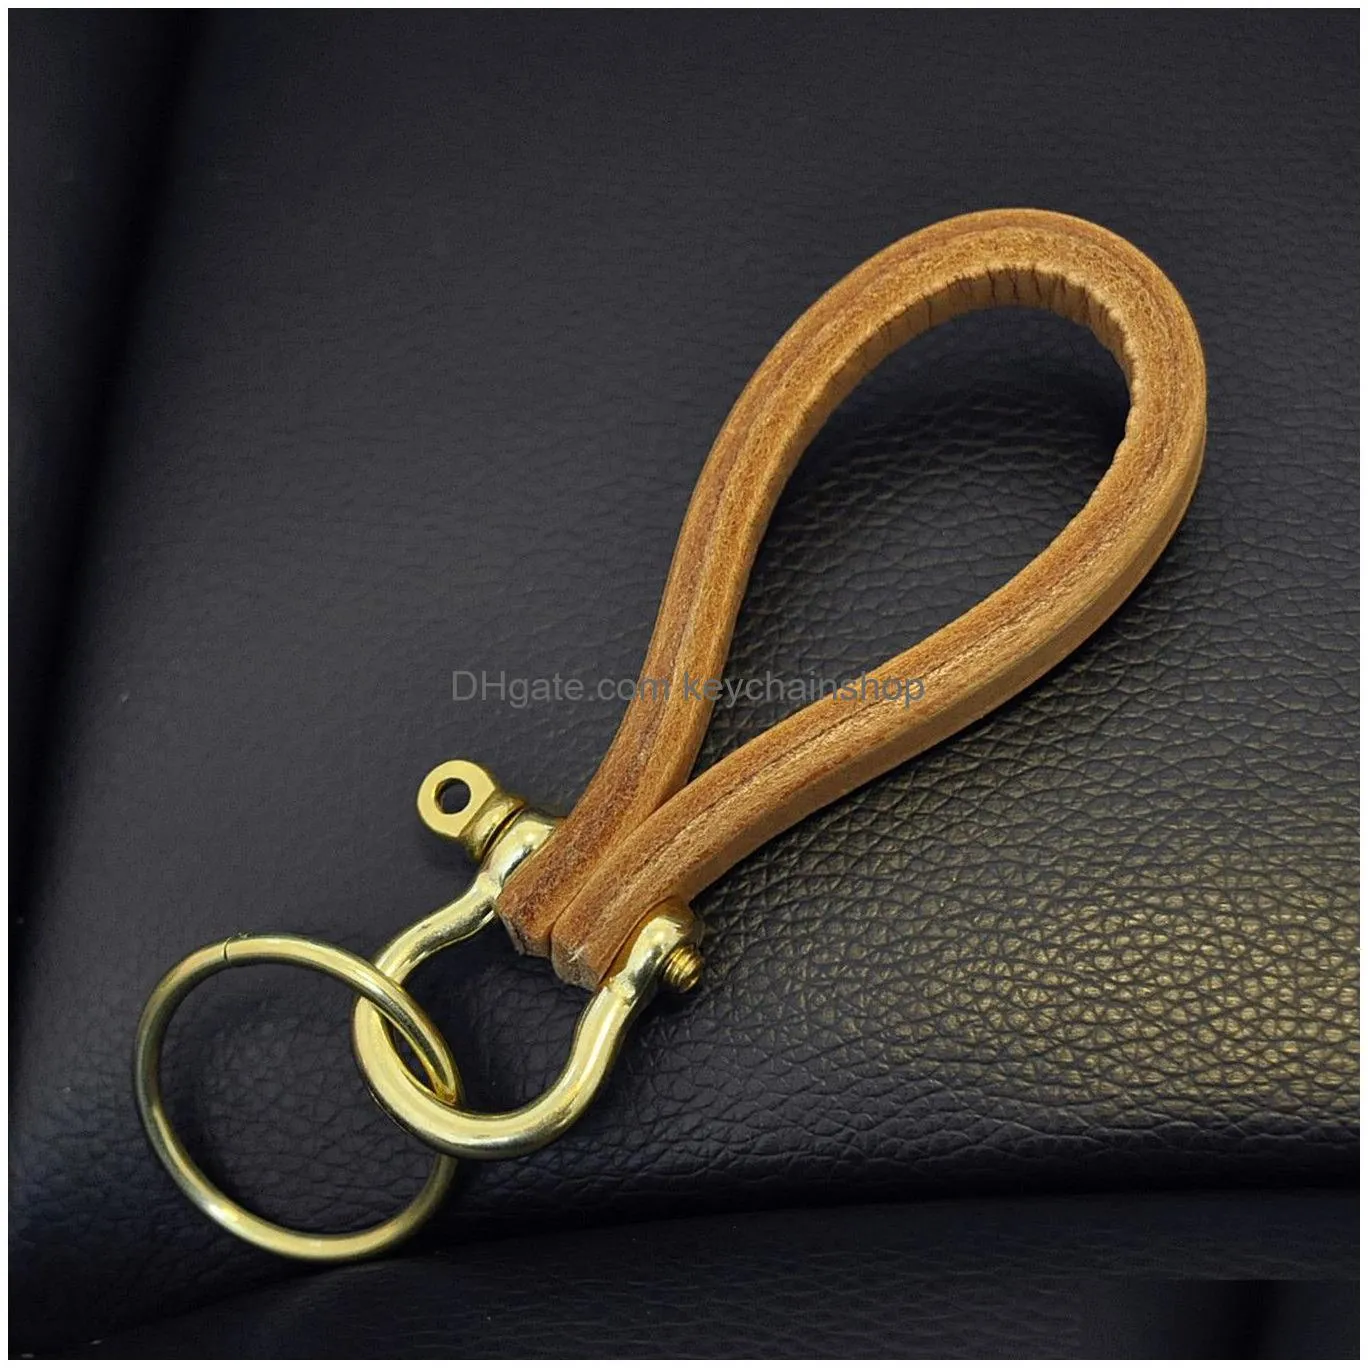 retro key chain metal leather keychain party minimalist style hook horseshoe buckle